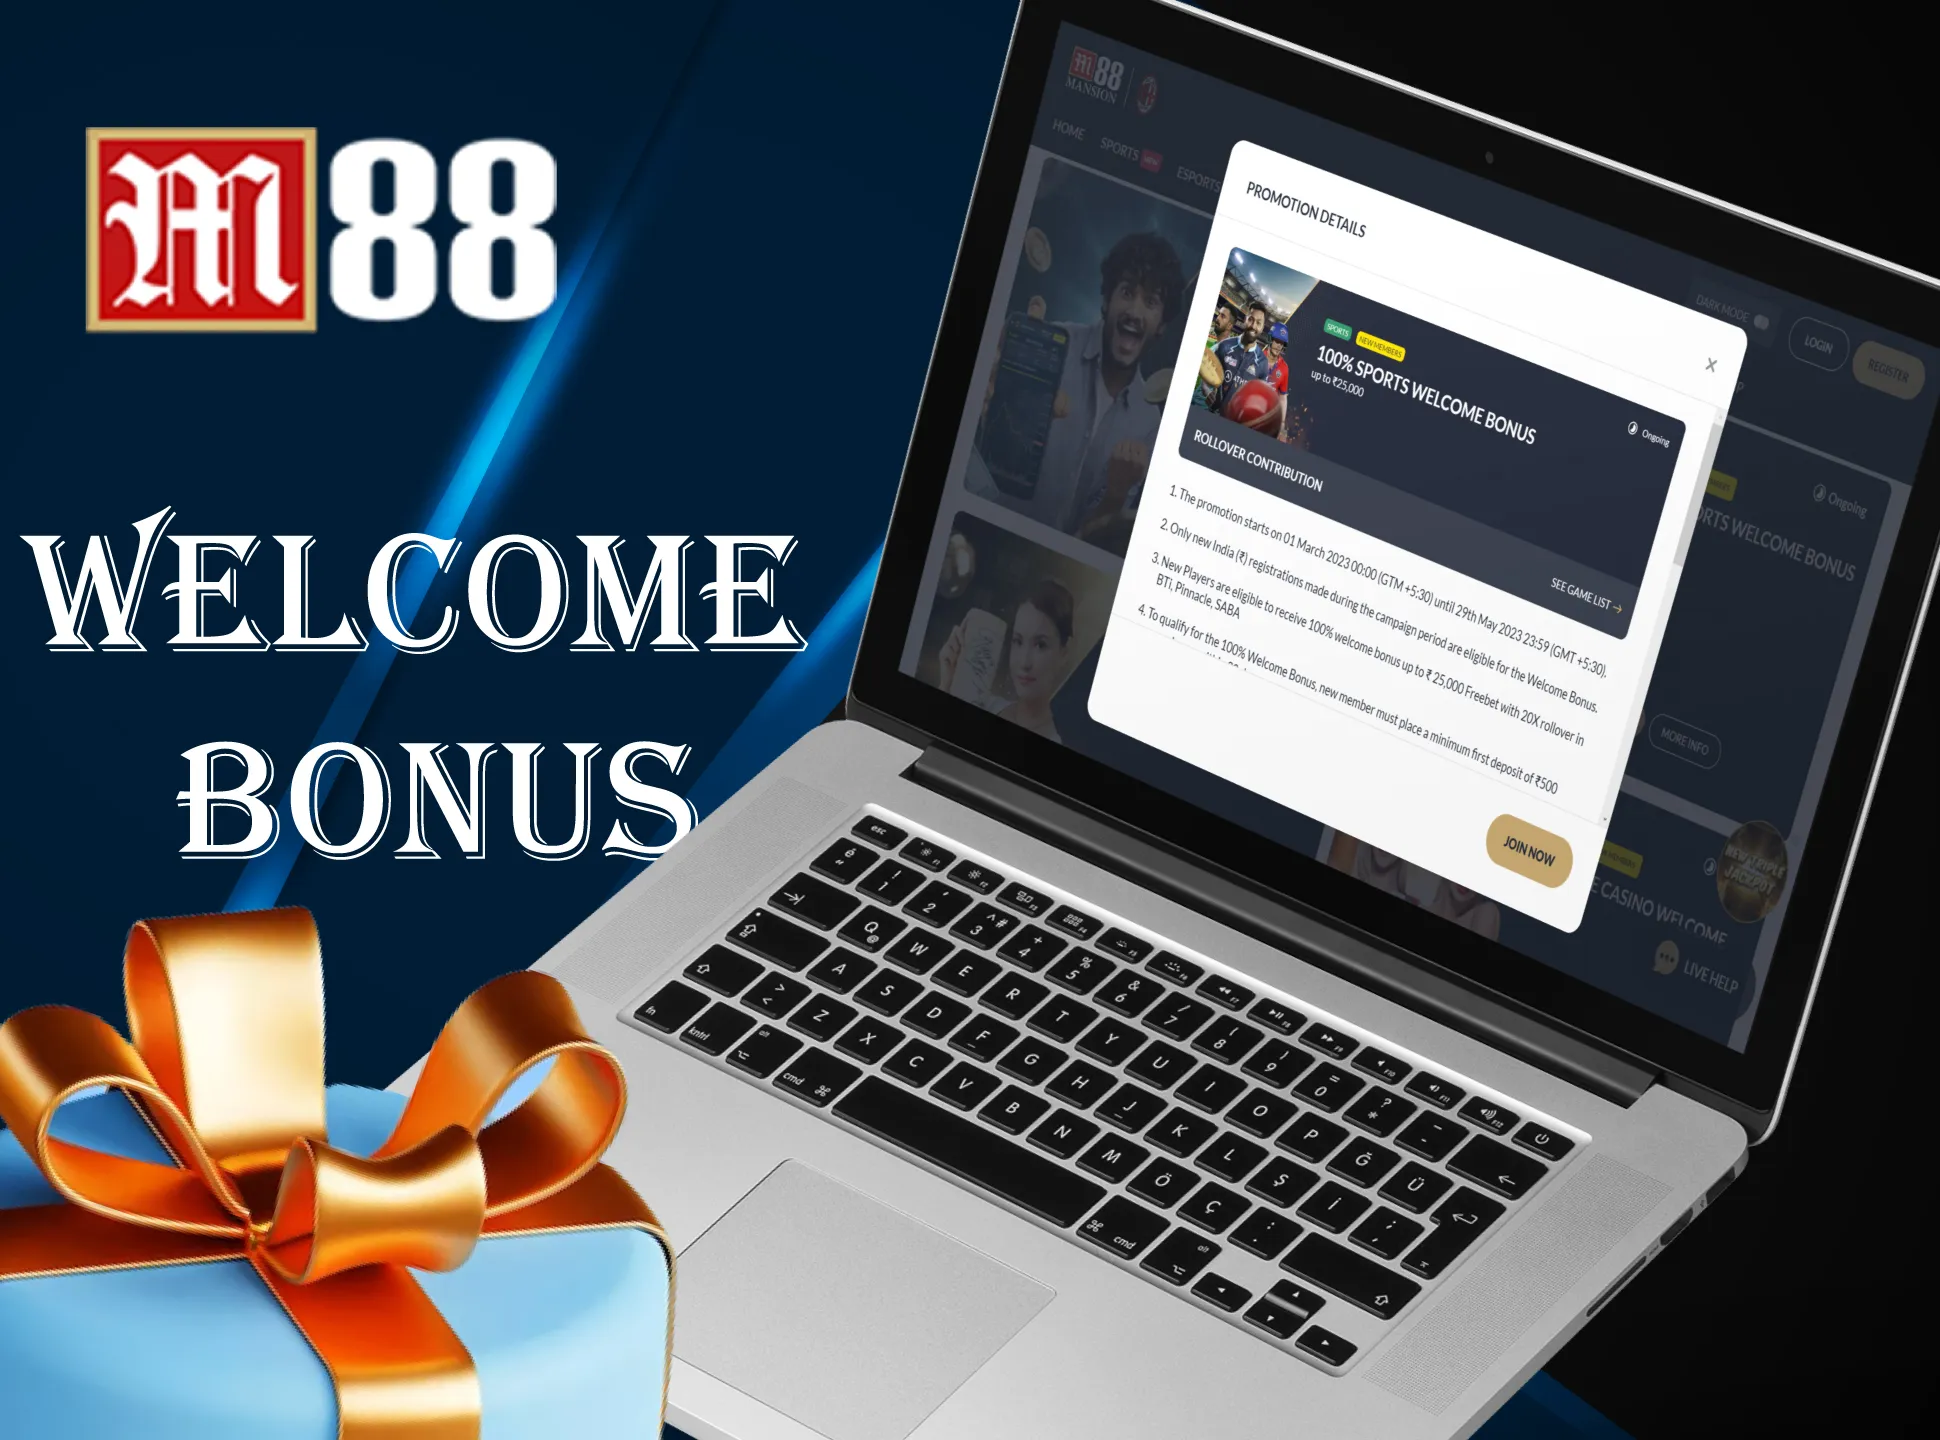 Get M88 welcome bonus after first deposit.